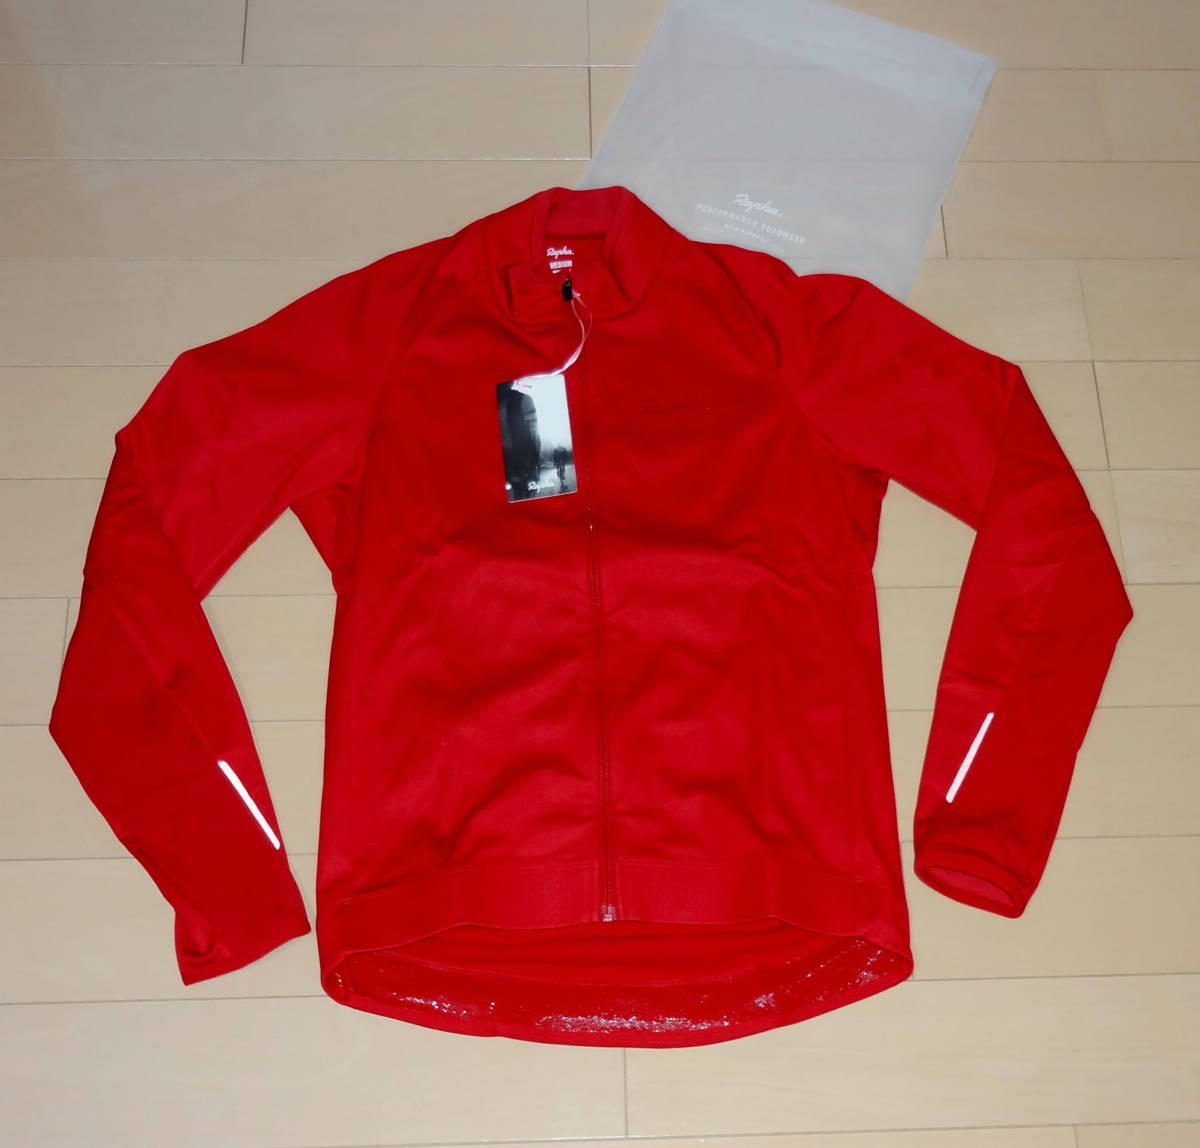 ◆тия нового! Rapha Rafa Men's Core Winter Jacket ◆◆ Red Mabine Fleece Size M Size M (Search Pro Team Classic)